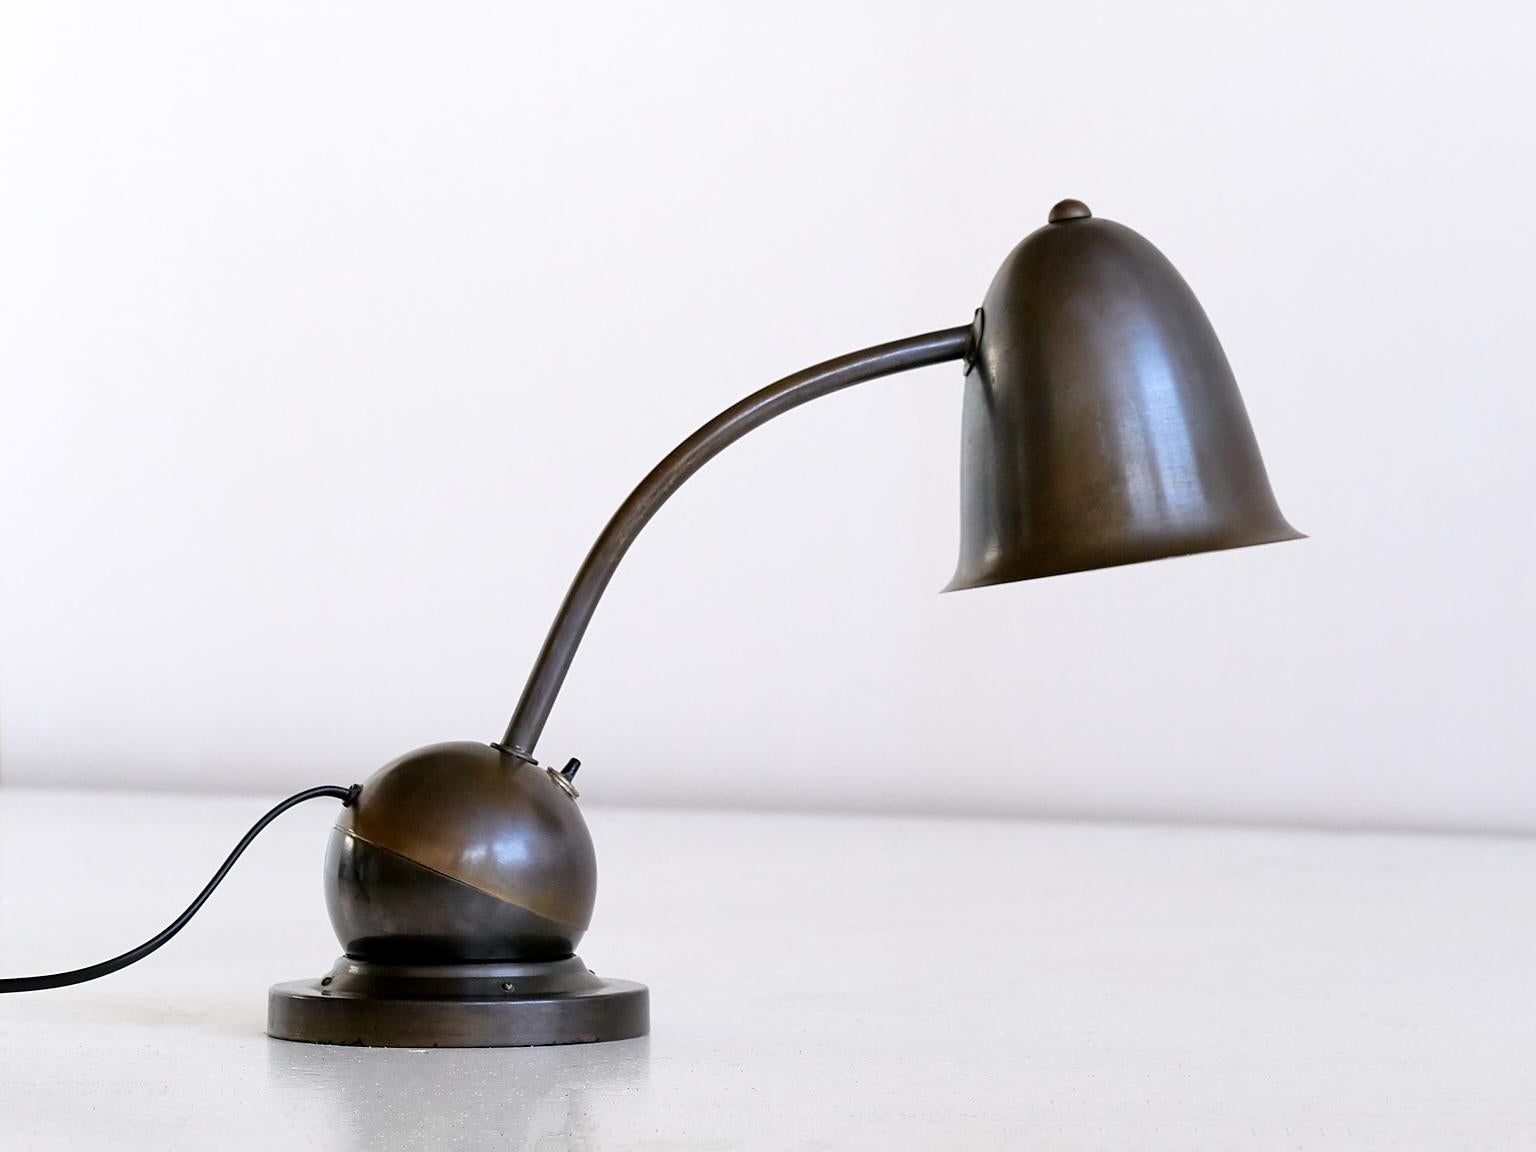 Bronzed KMD Daalderop Art Deco Counterweight Desk Lamp with Bell Shade, 1935